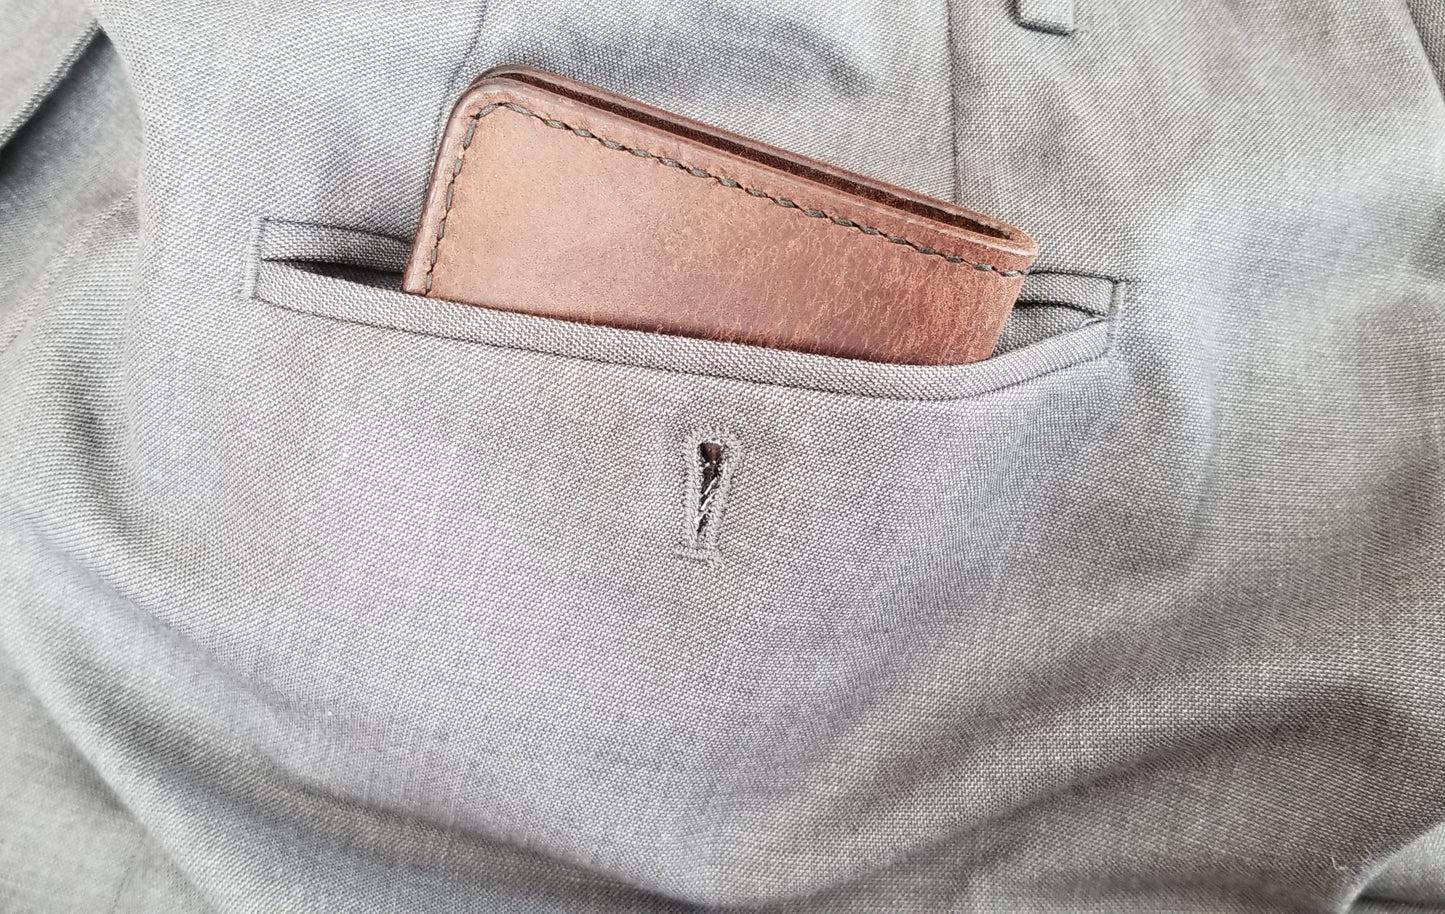 6-Pocket Vertical Bifold Wallet (Italian Leather)